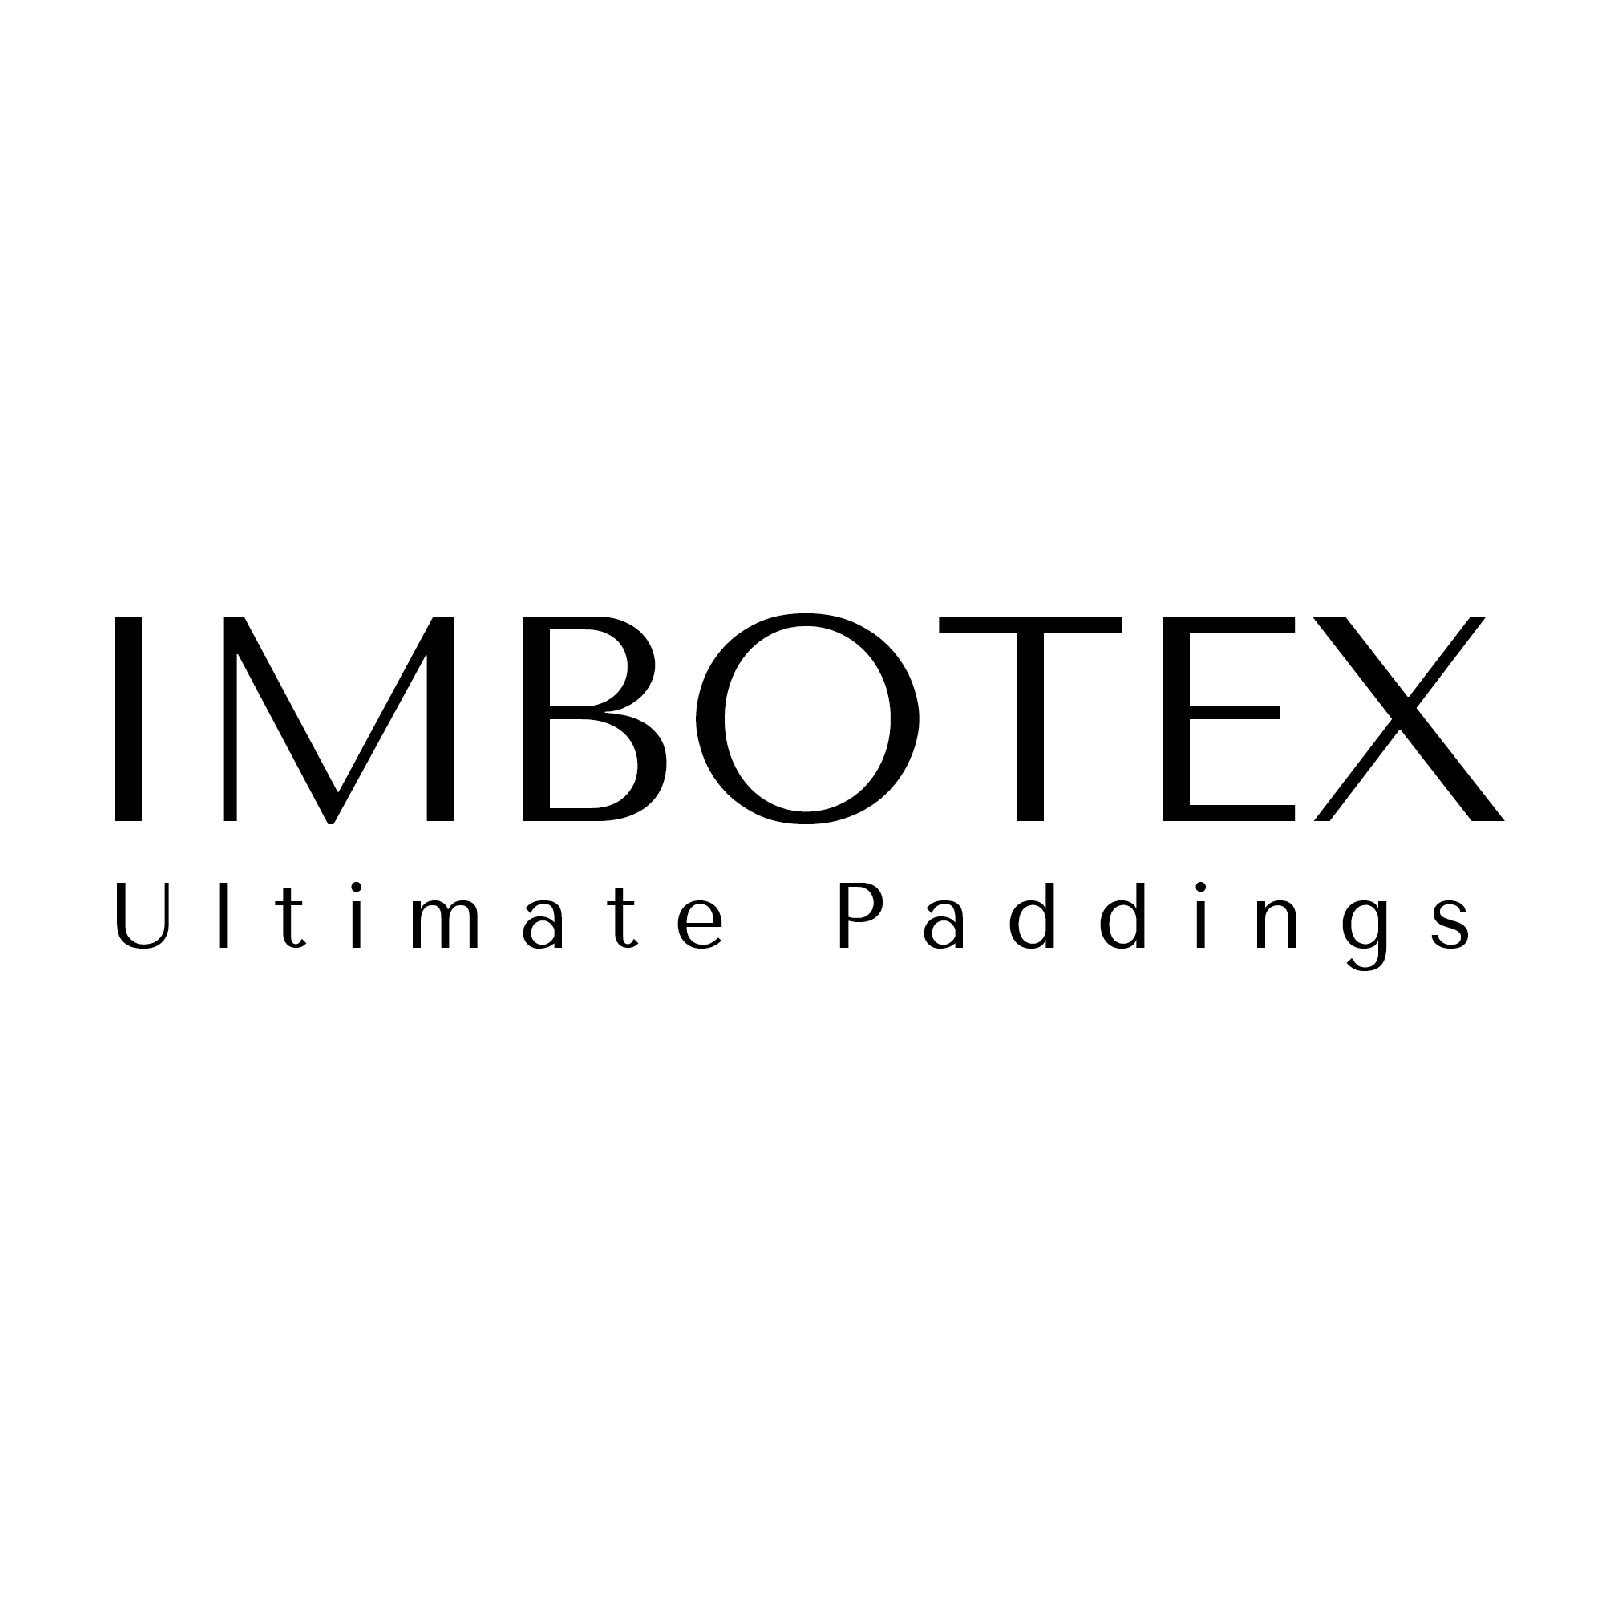 imbotex logo_Tavola disegno 1.jpg